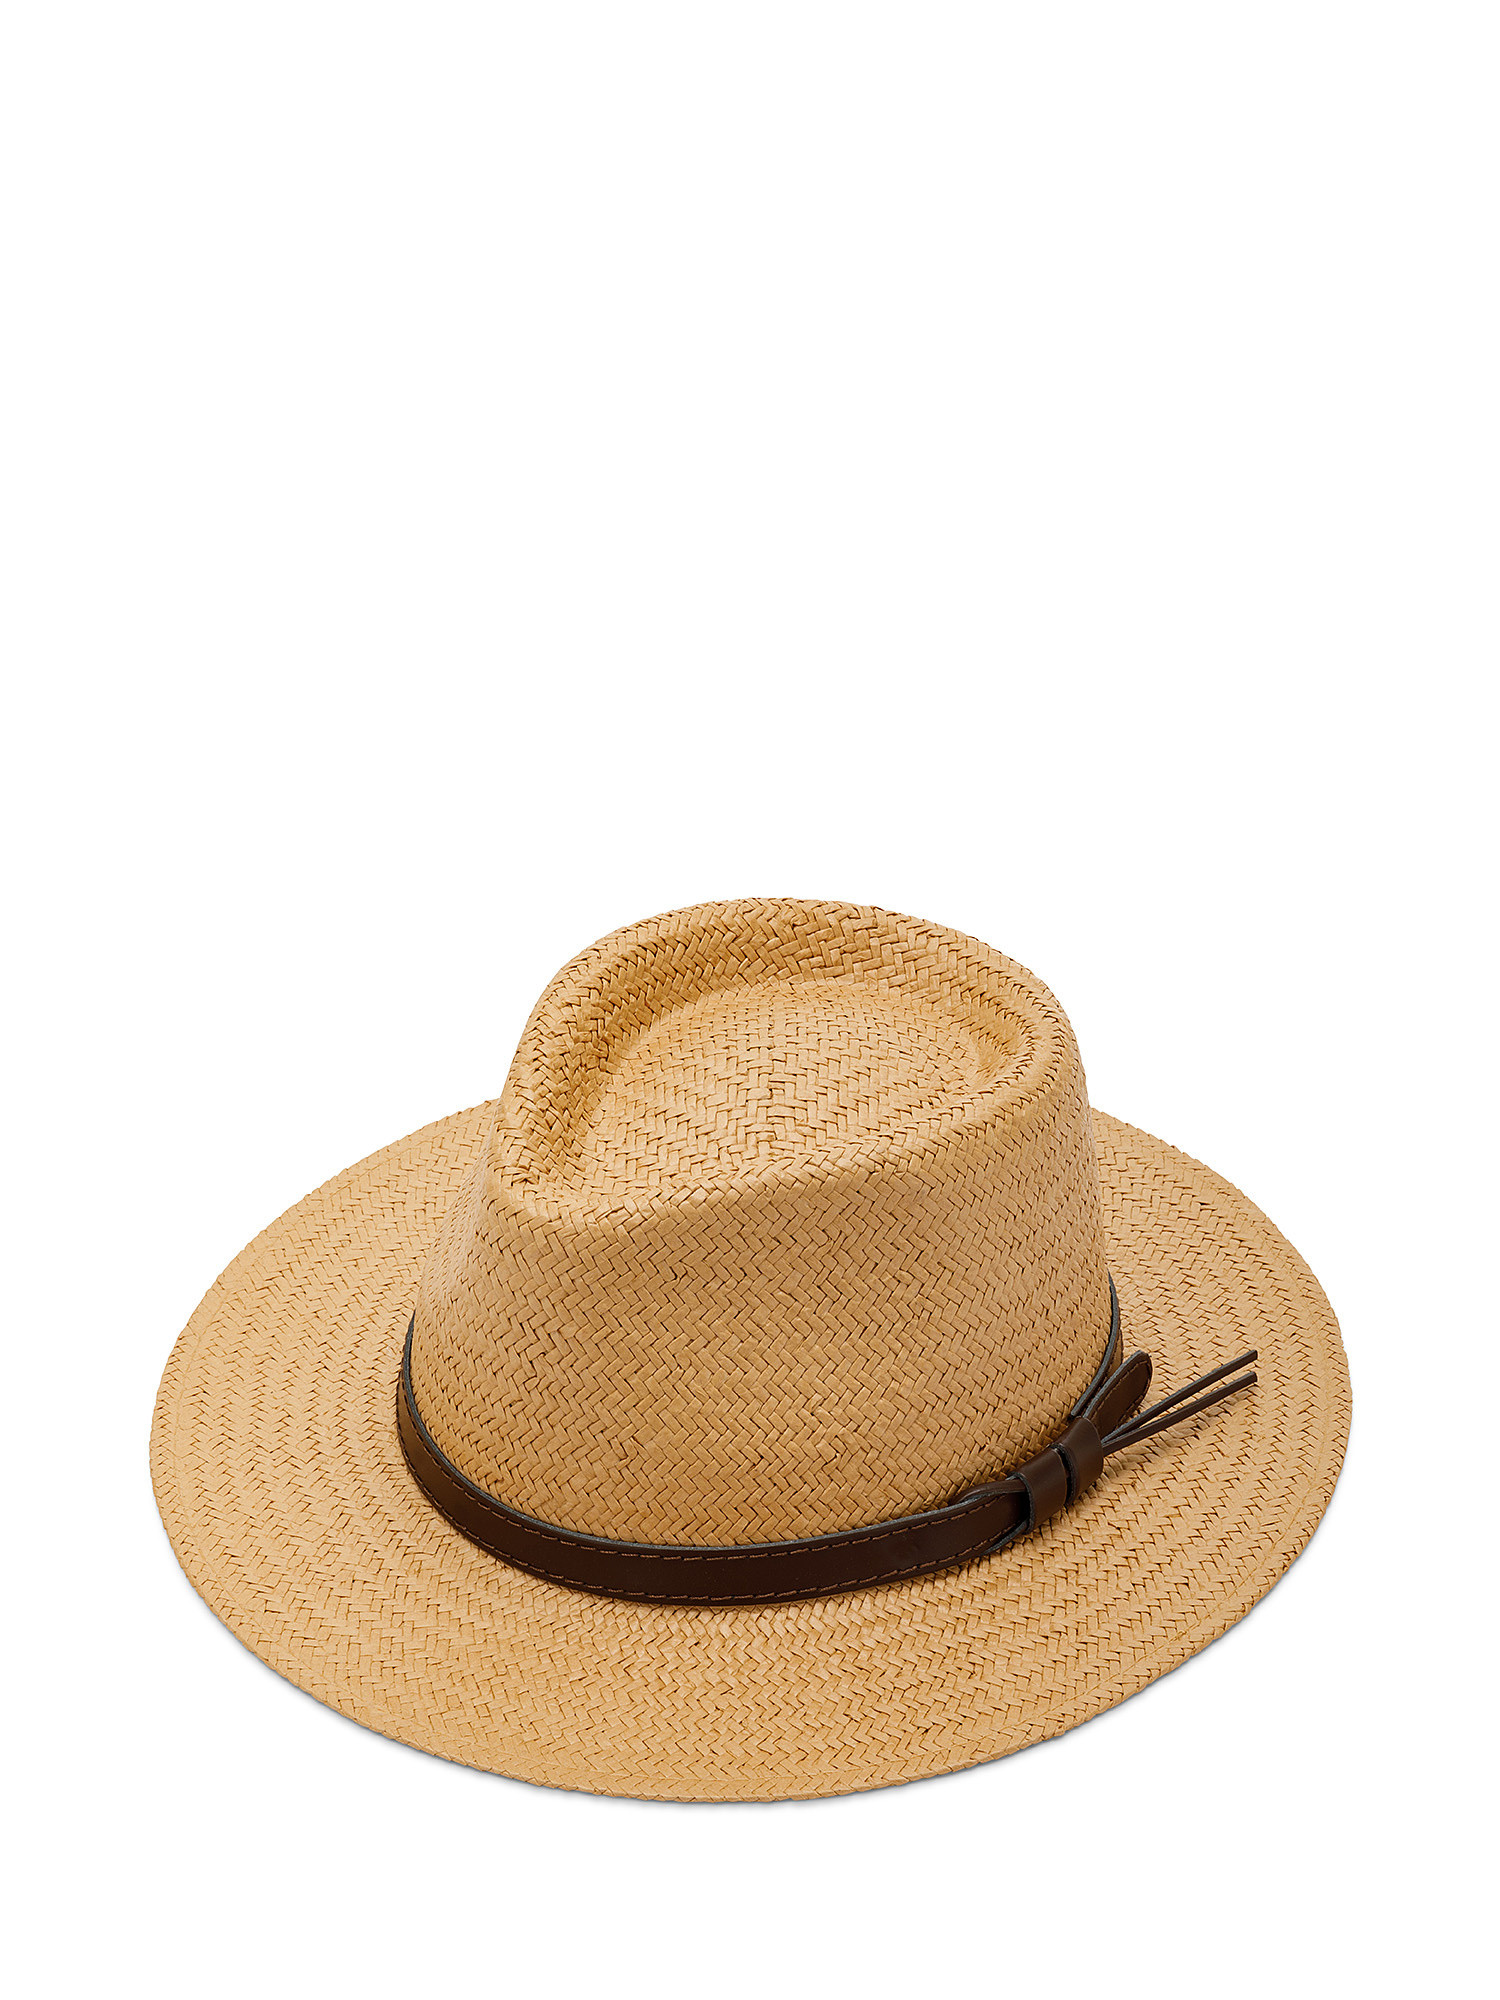 Straw panama hat, Light Beige, large image number 0